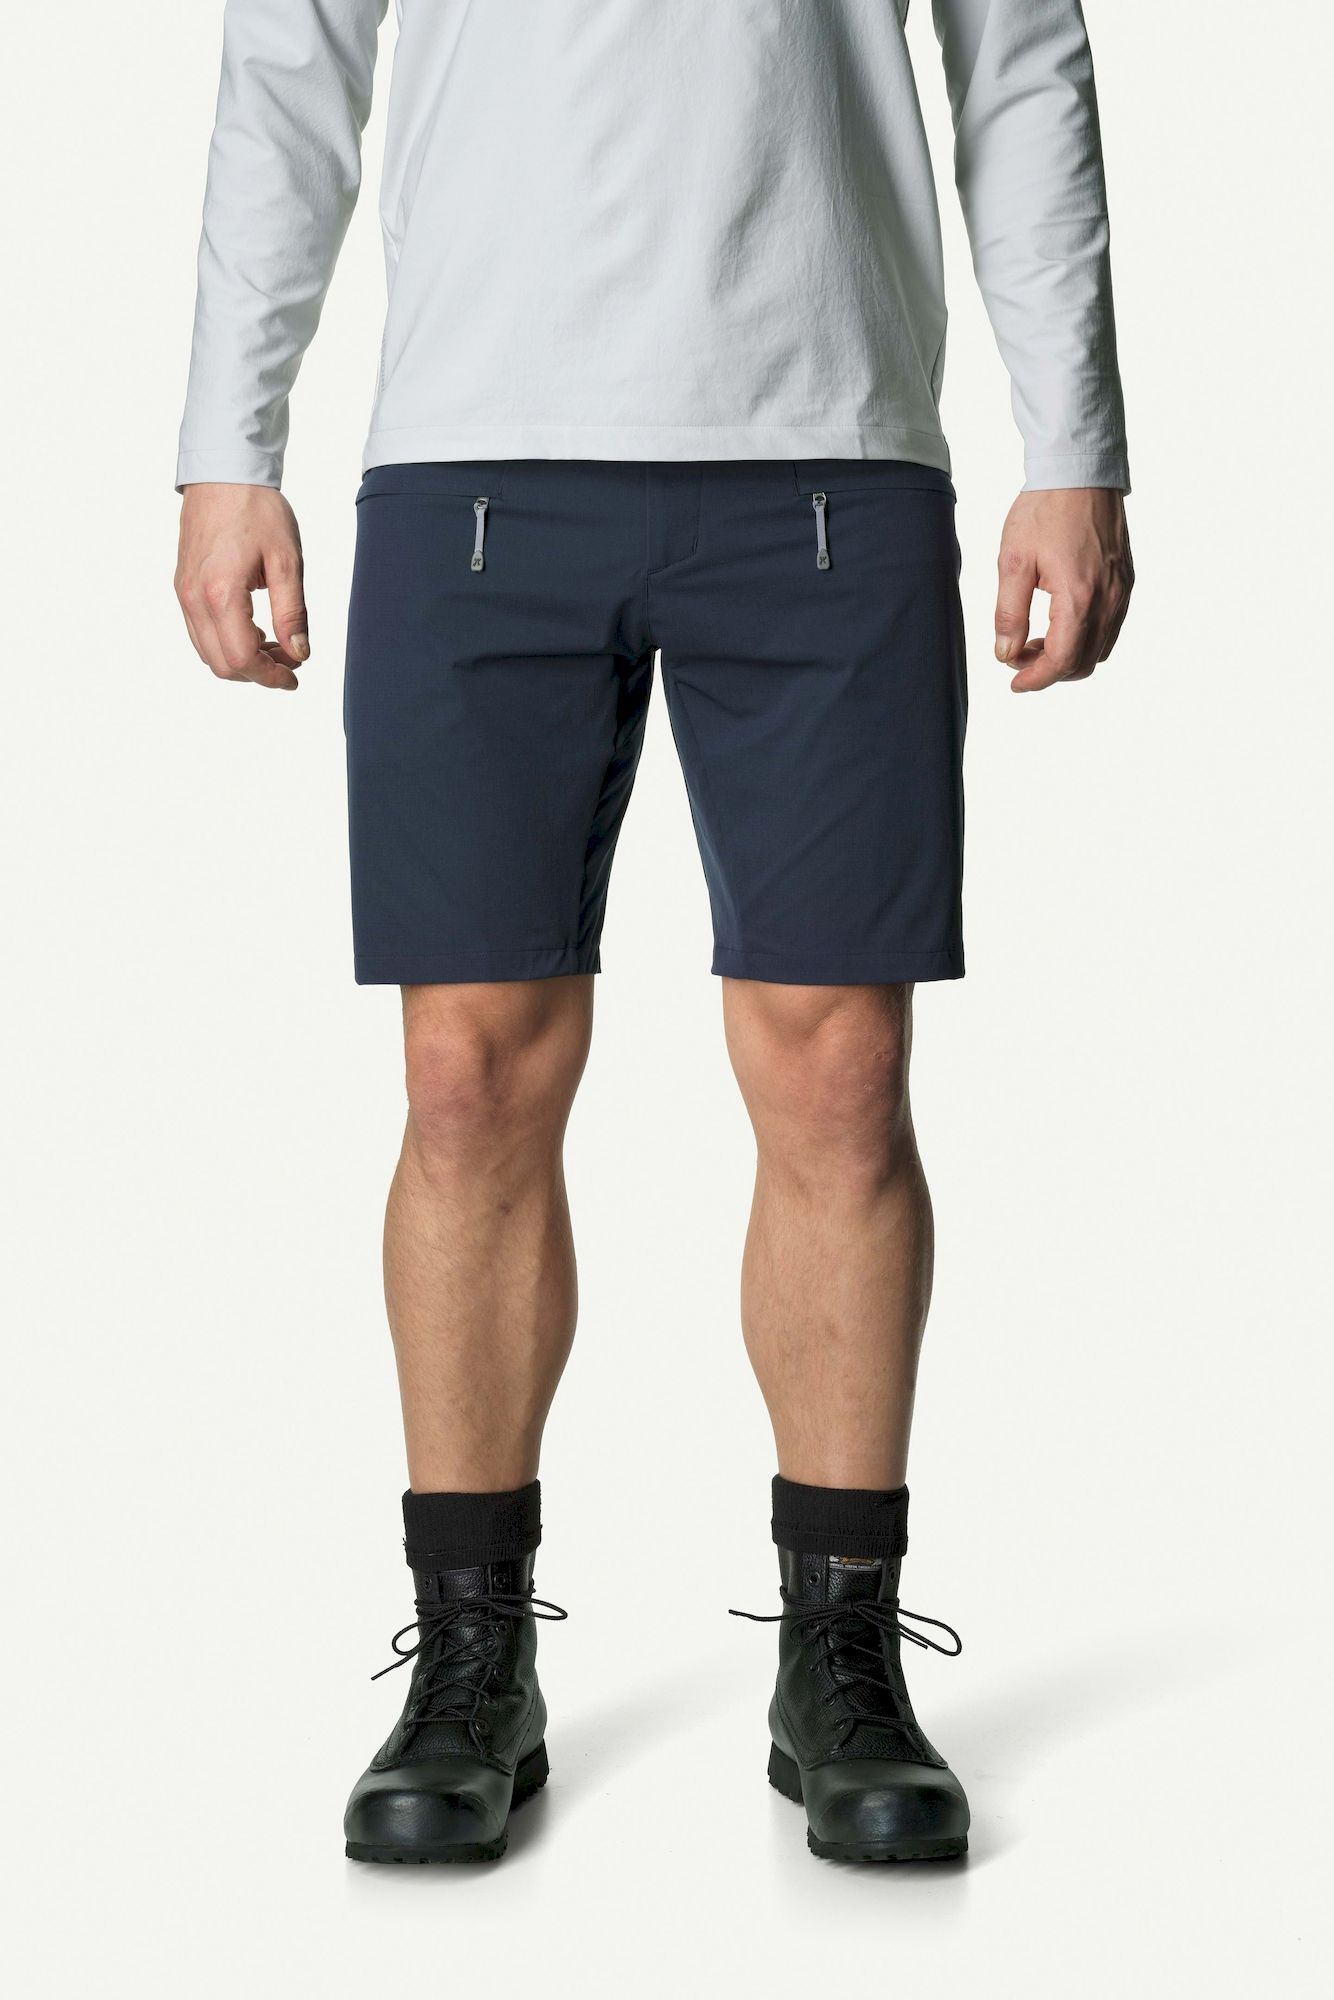 Houdini Sportswear Daybreak Shorts - Short randonnée homme | Hardloop